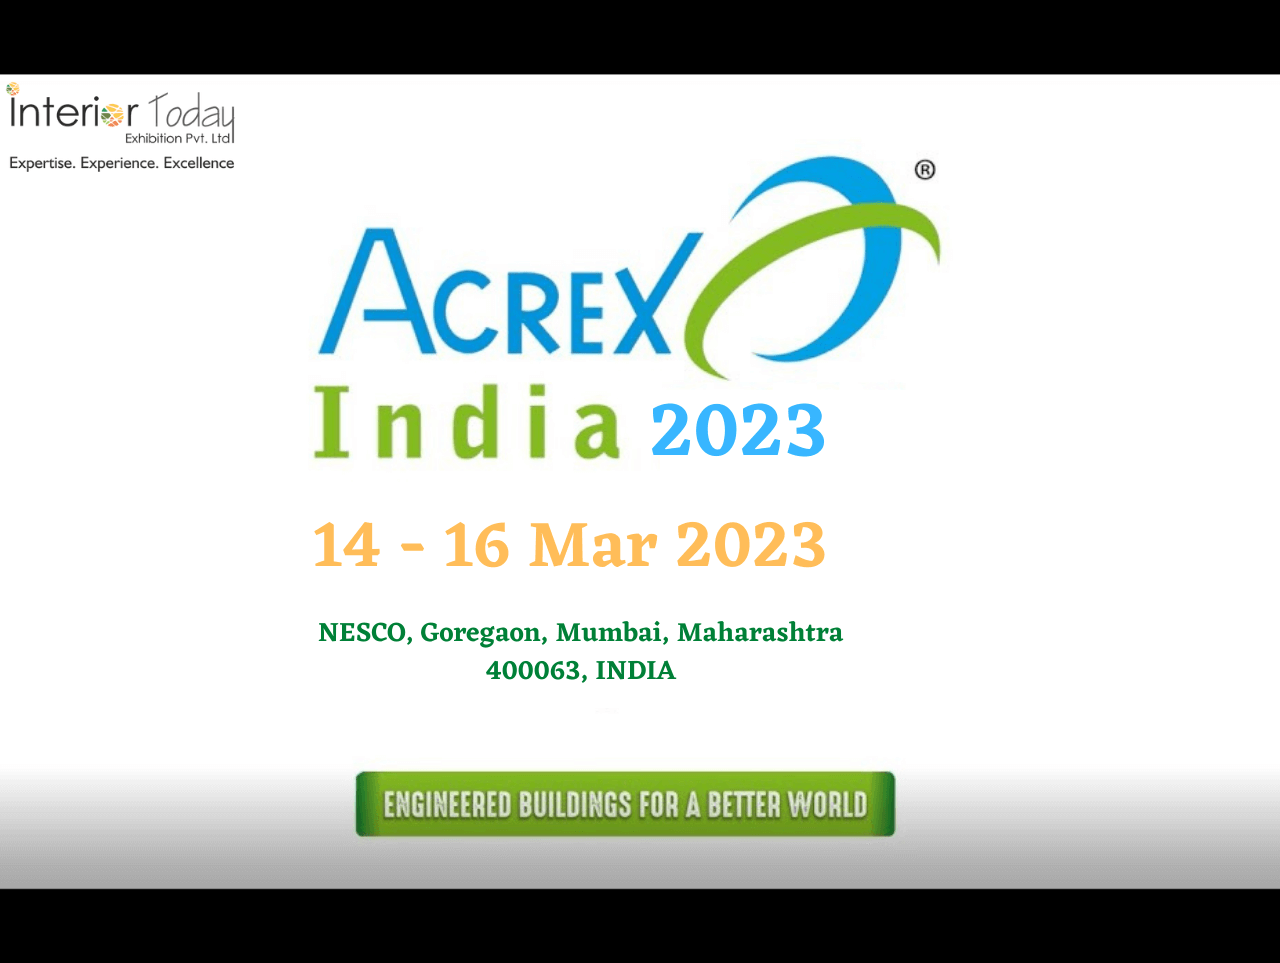 acrex-india-14-16-march-2023-interior-today